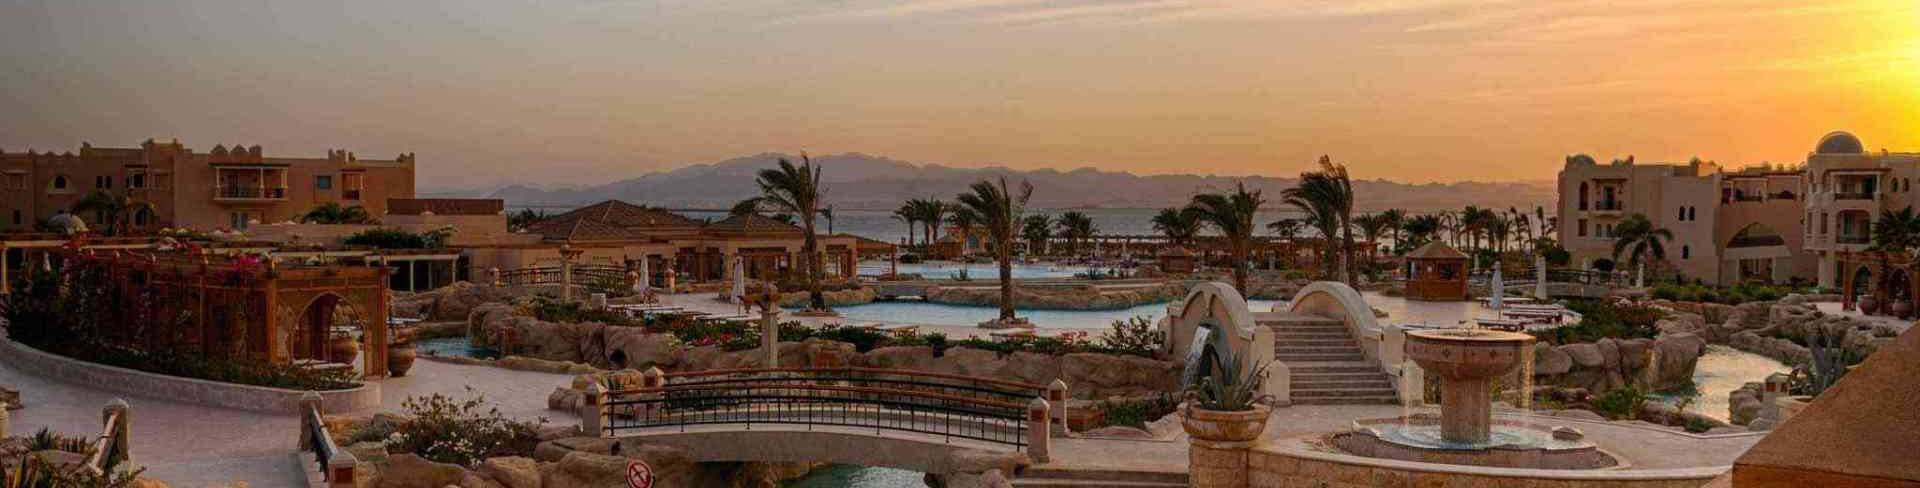 Сафага - курорт на Красном море в Египте